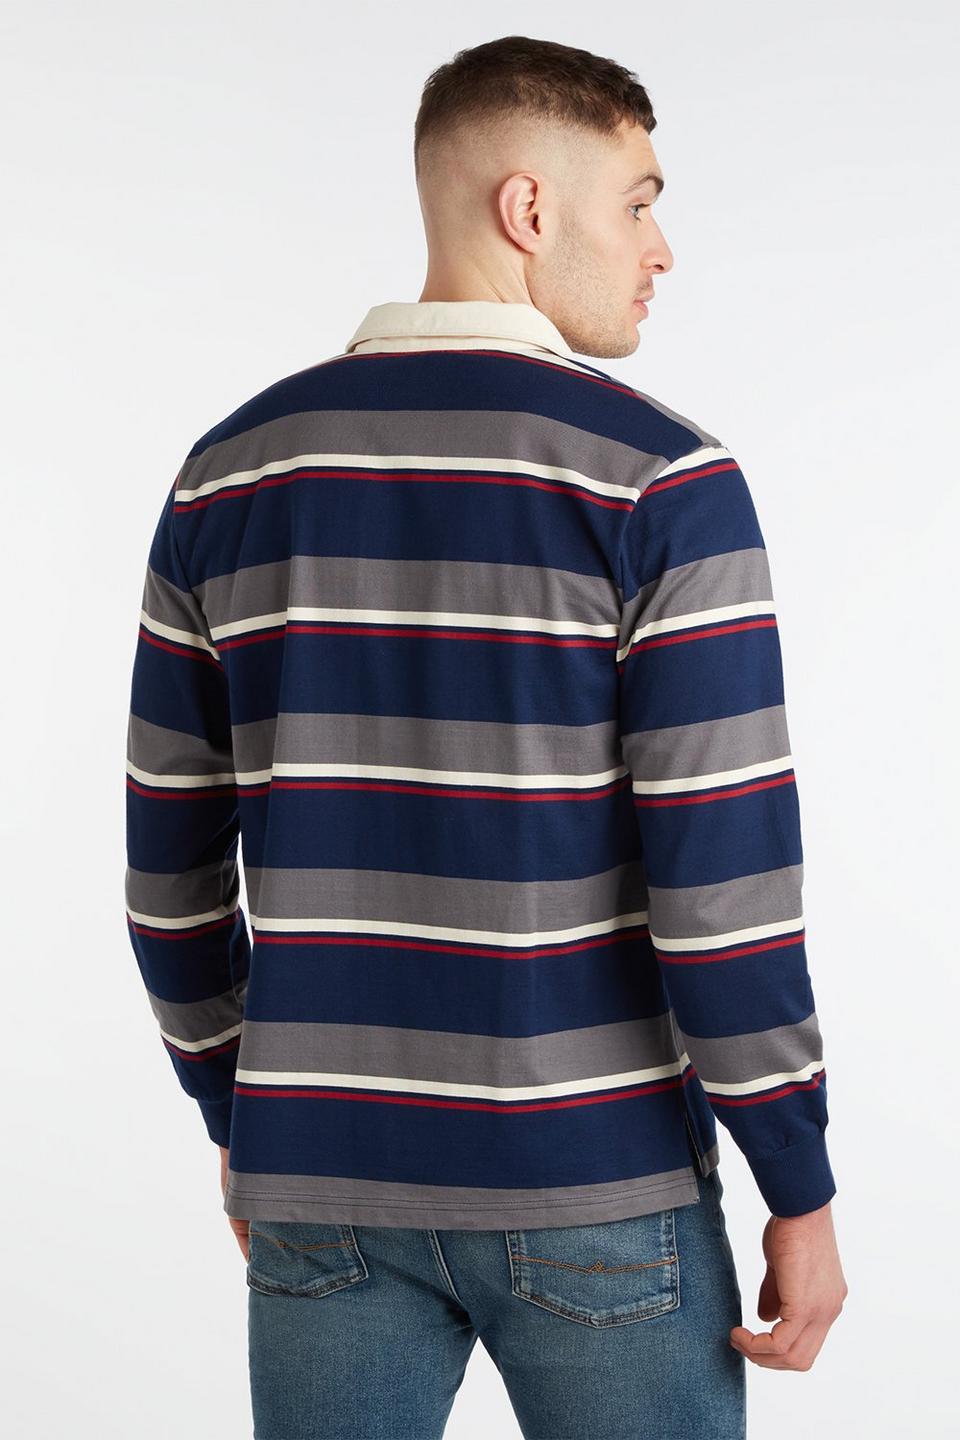 Polos | RFU Colour Block Striped Long Sleeve Rugby Shirt | Umbro